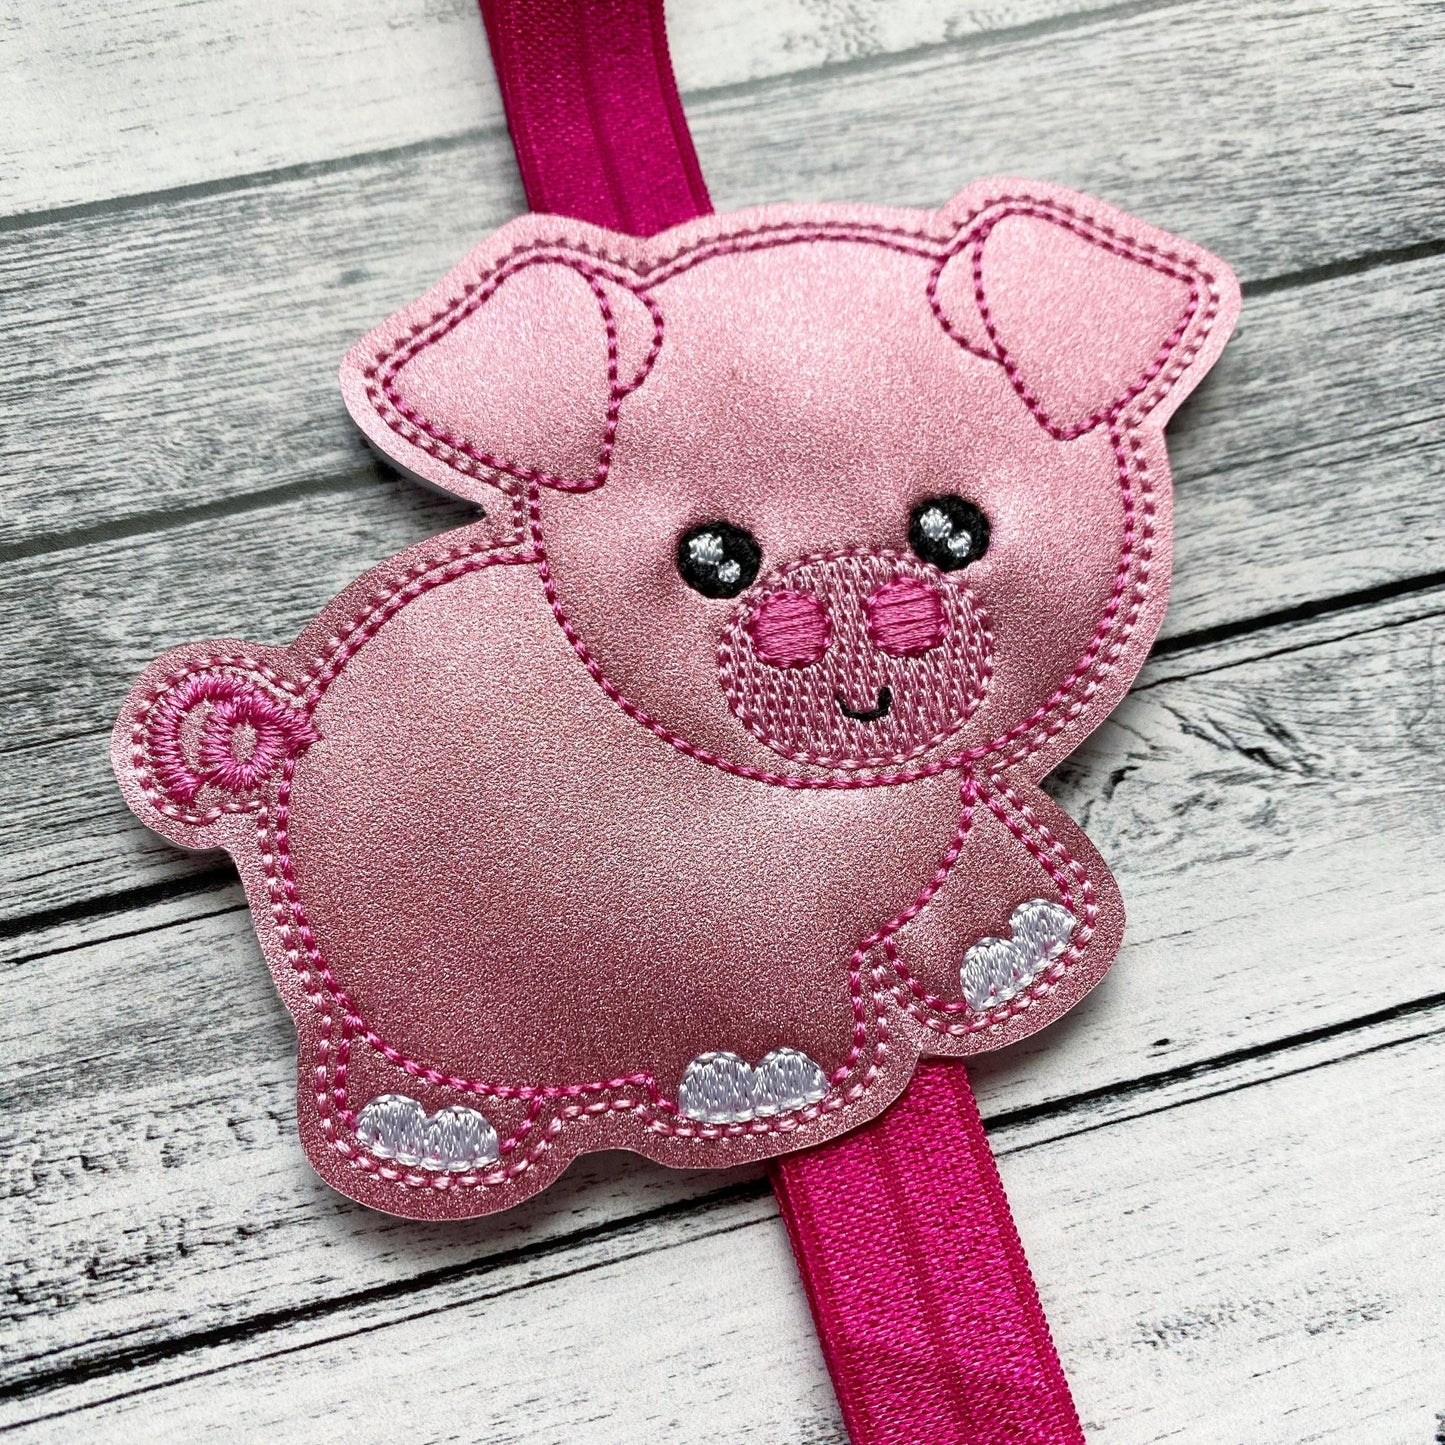 Pig Book Band - Embroidery Design, Digital File